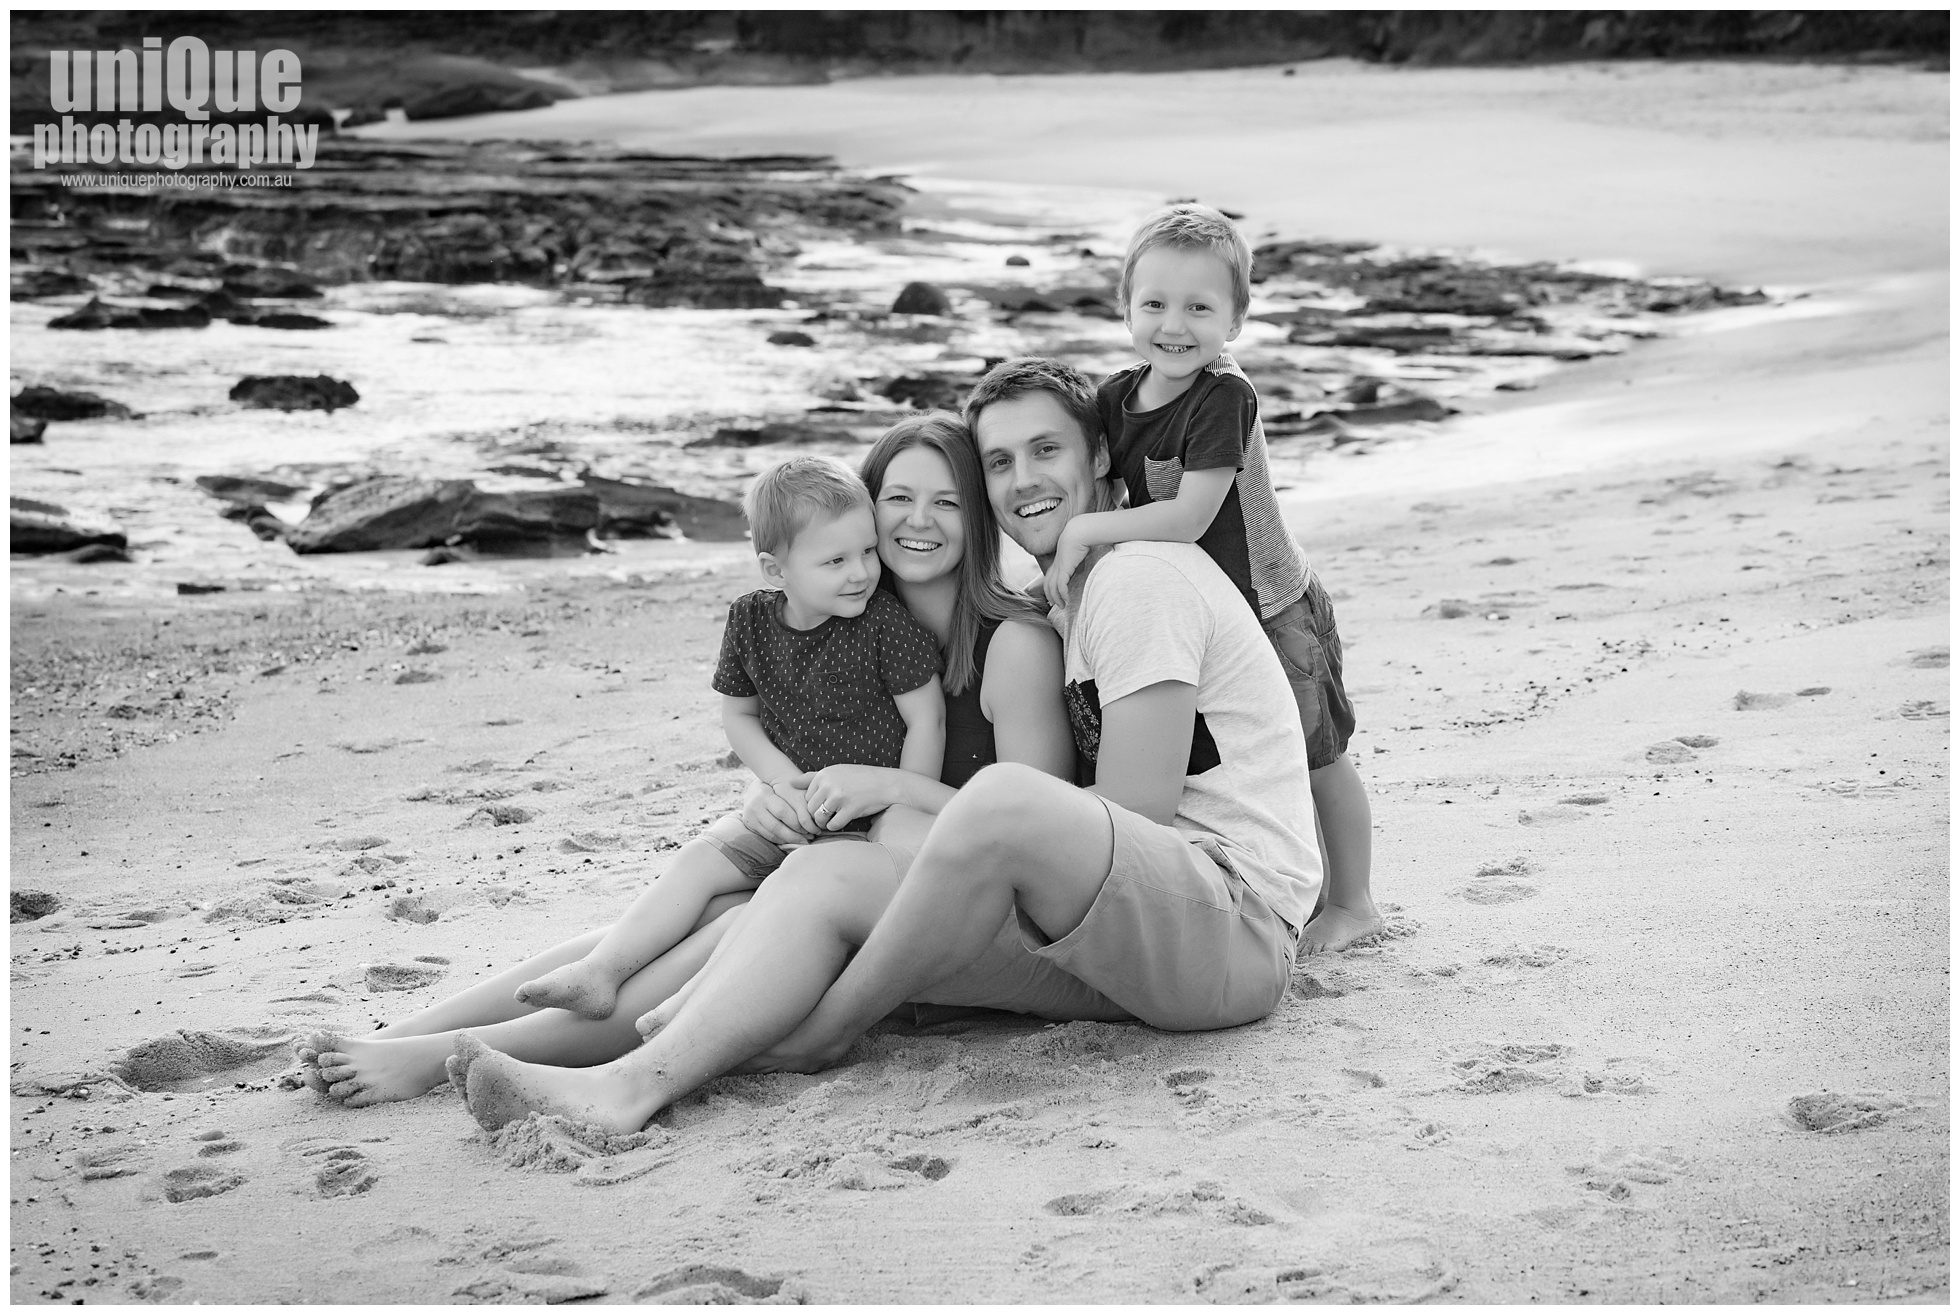 Family,beach photo shoot,central coast,central coast photographer,family photography,kids,norah head,outdoor,sibling photos,unique photography,